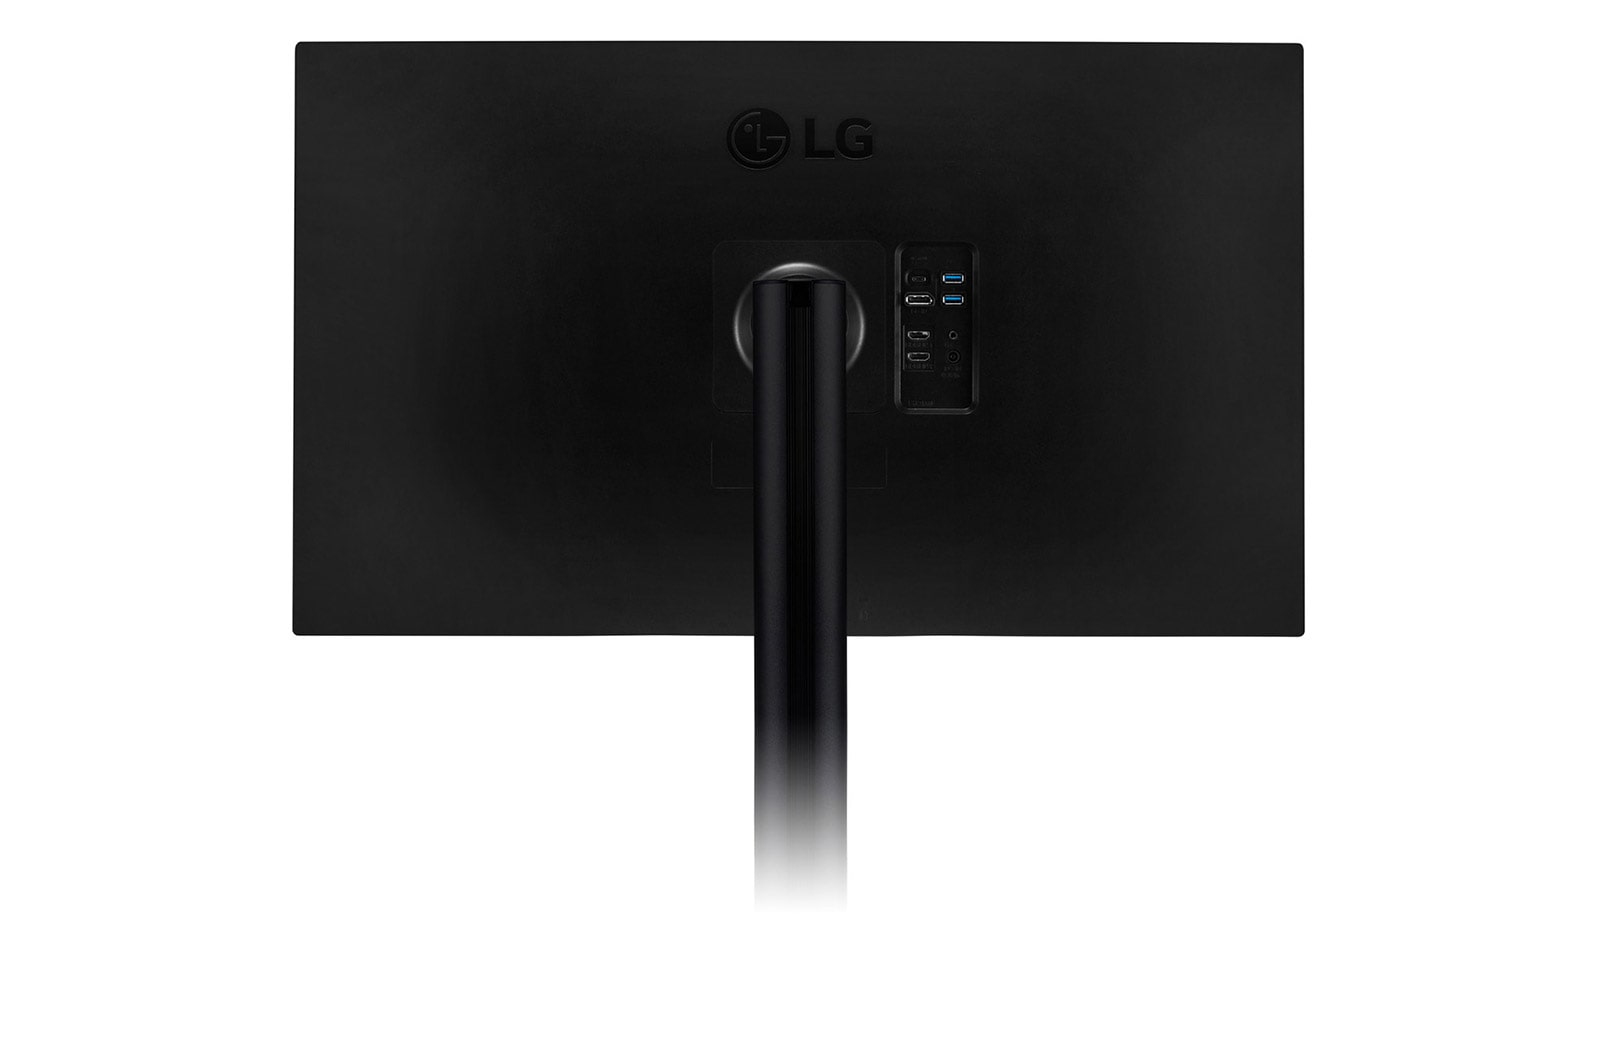 LG monitor Ergo 32UN880 - 31.5 inch